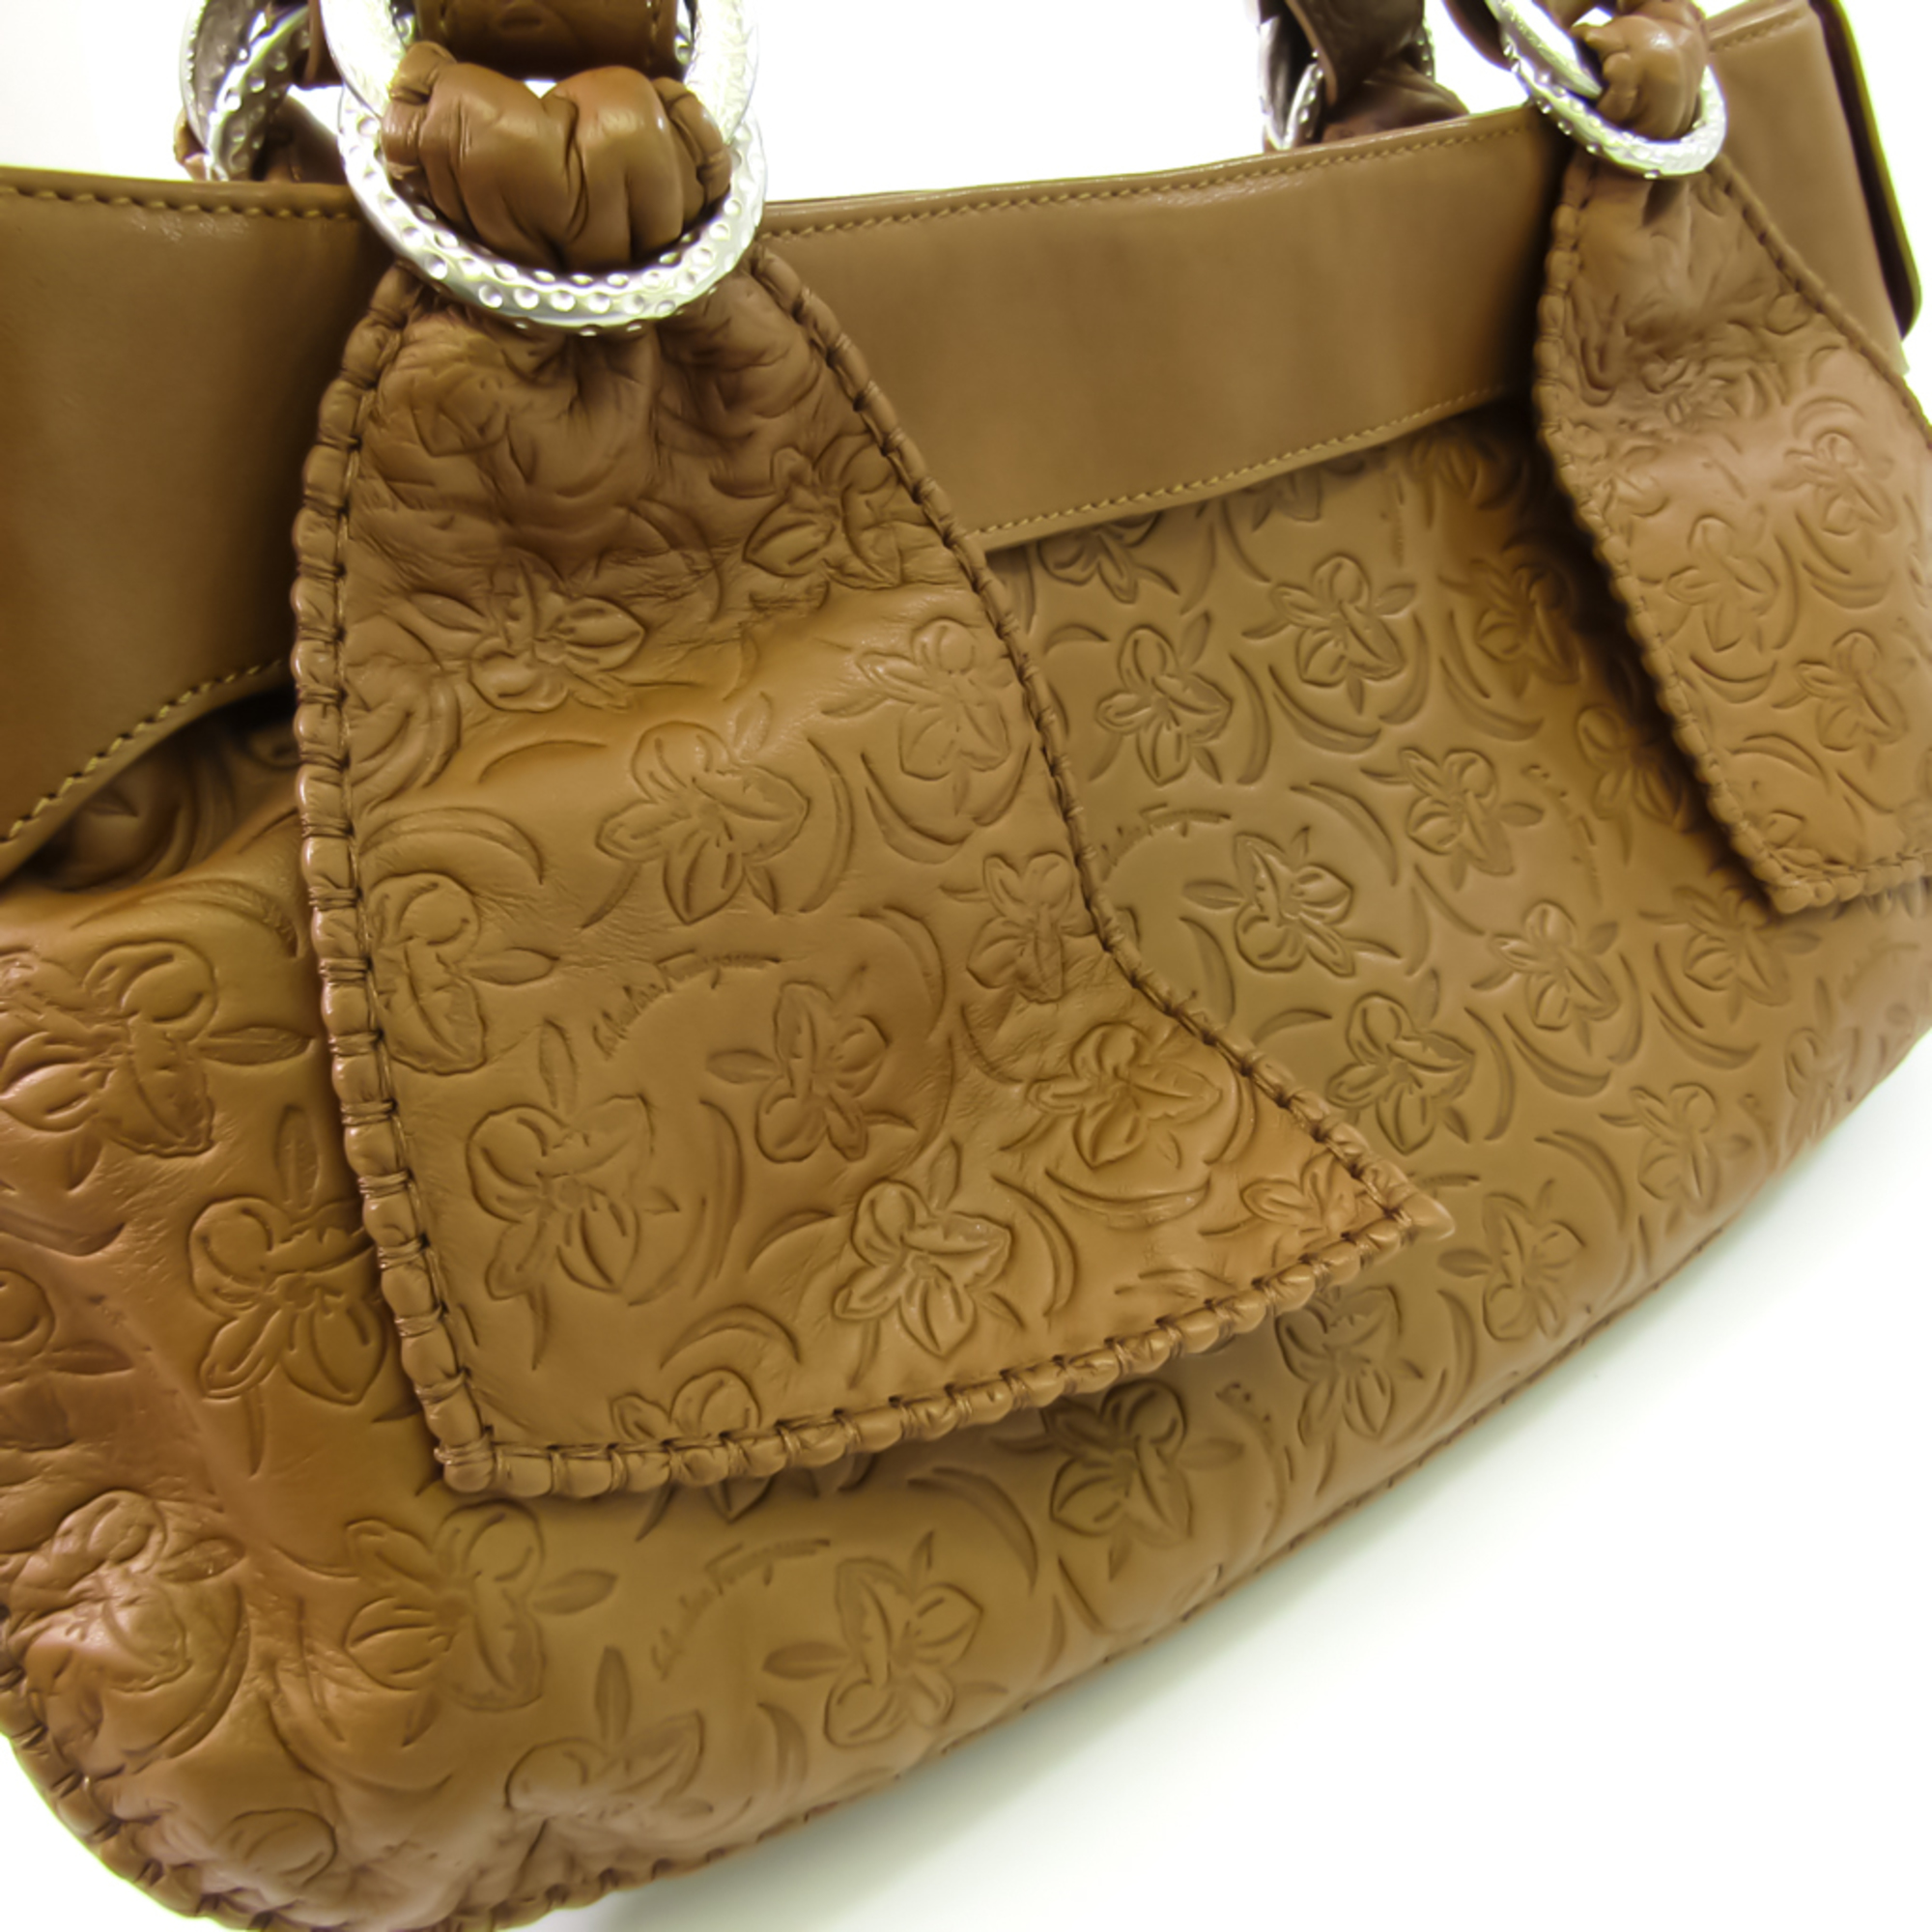 Salvatore Ferragamo Women's Leather Handbag Brown